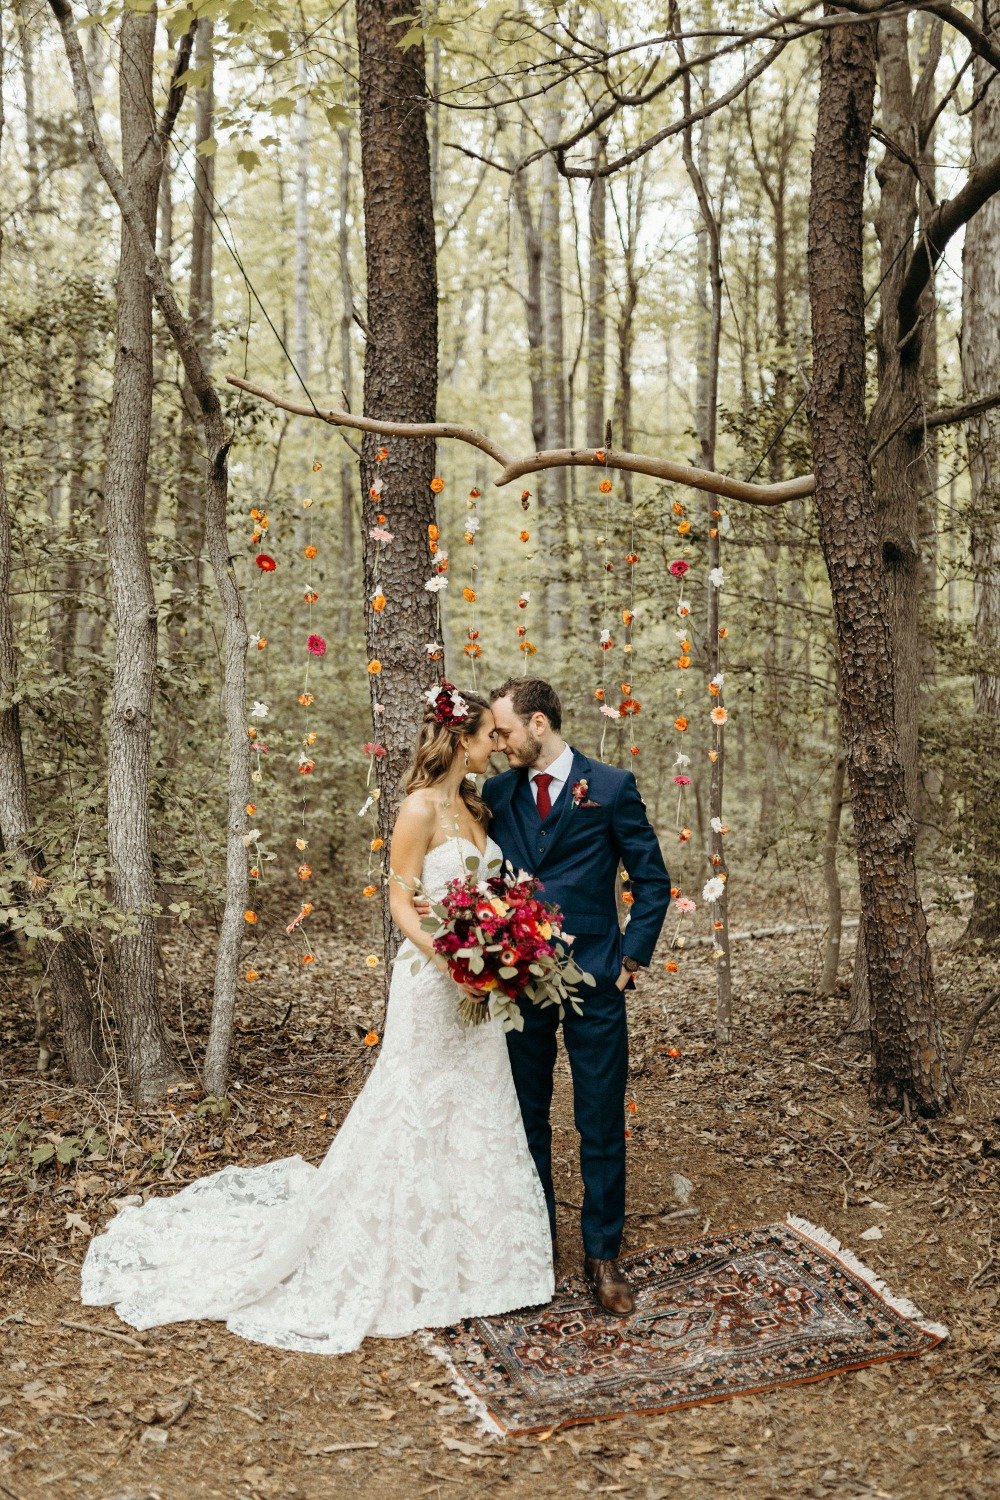 Romantic boho wedding in the woods